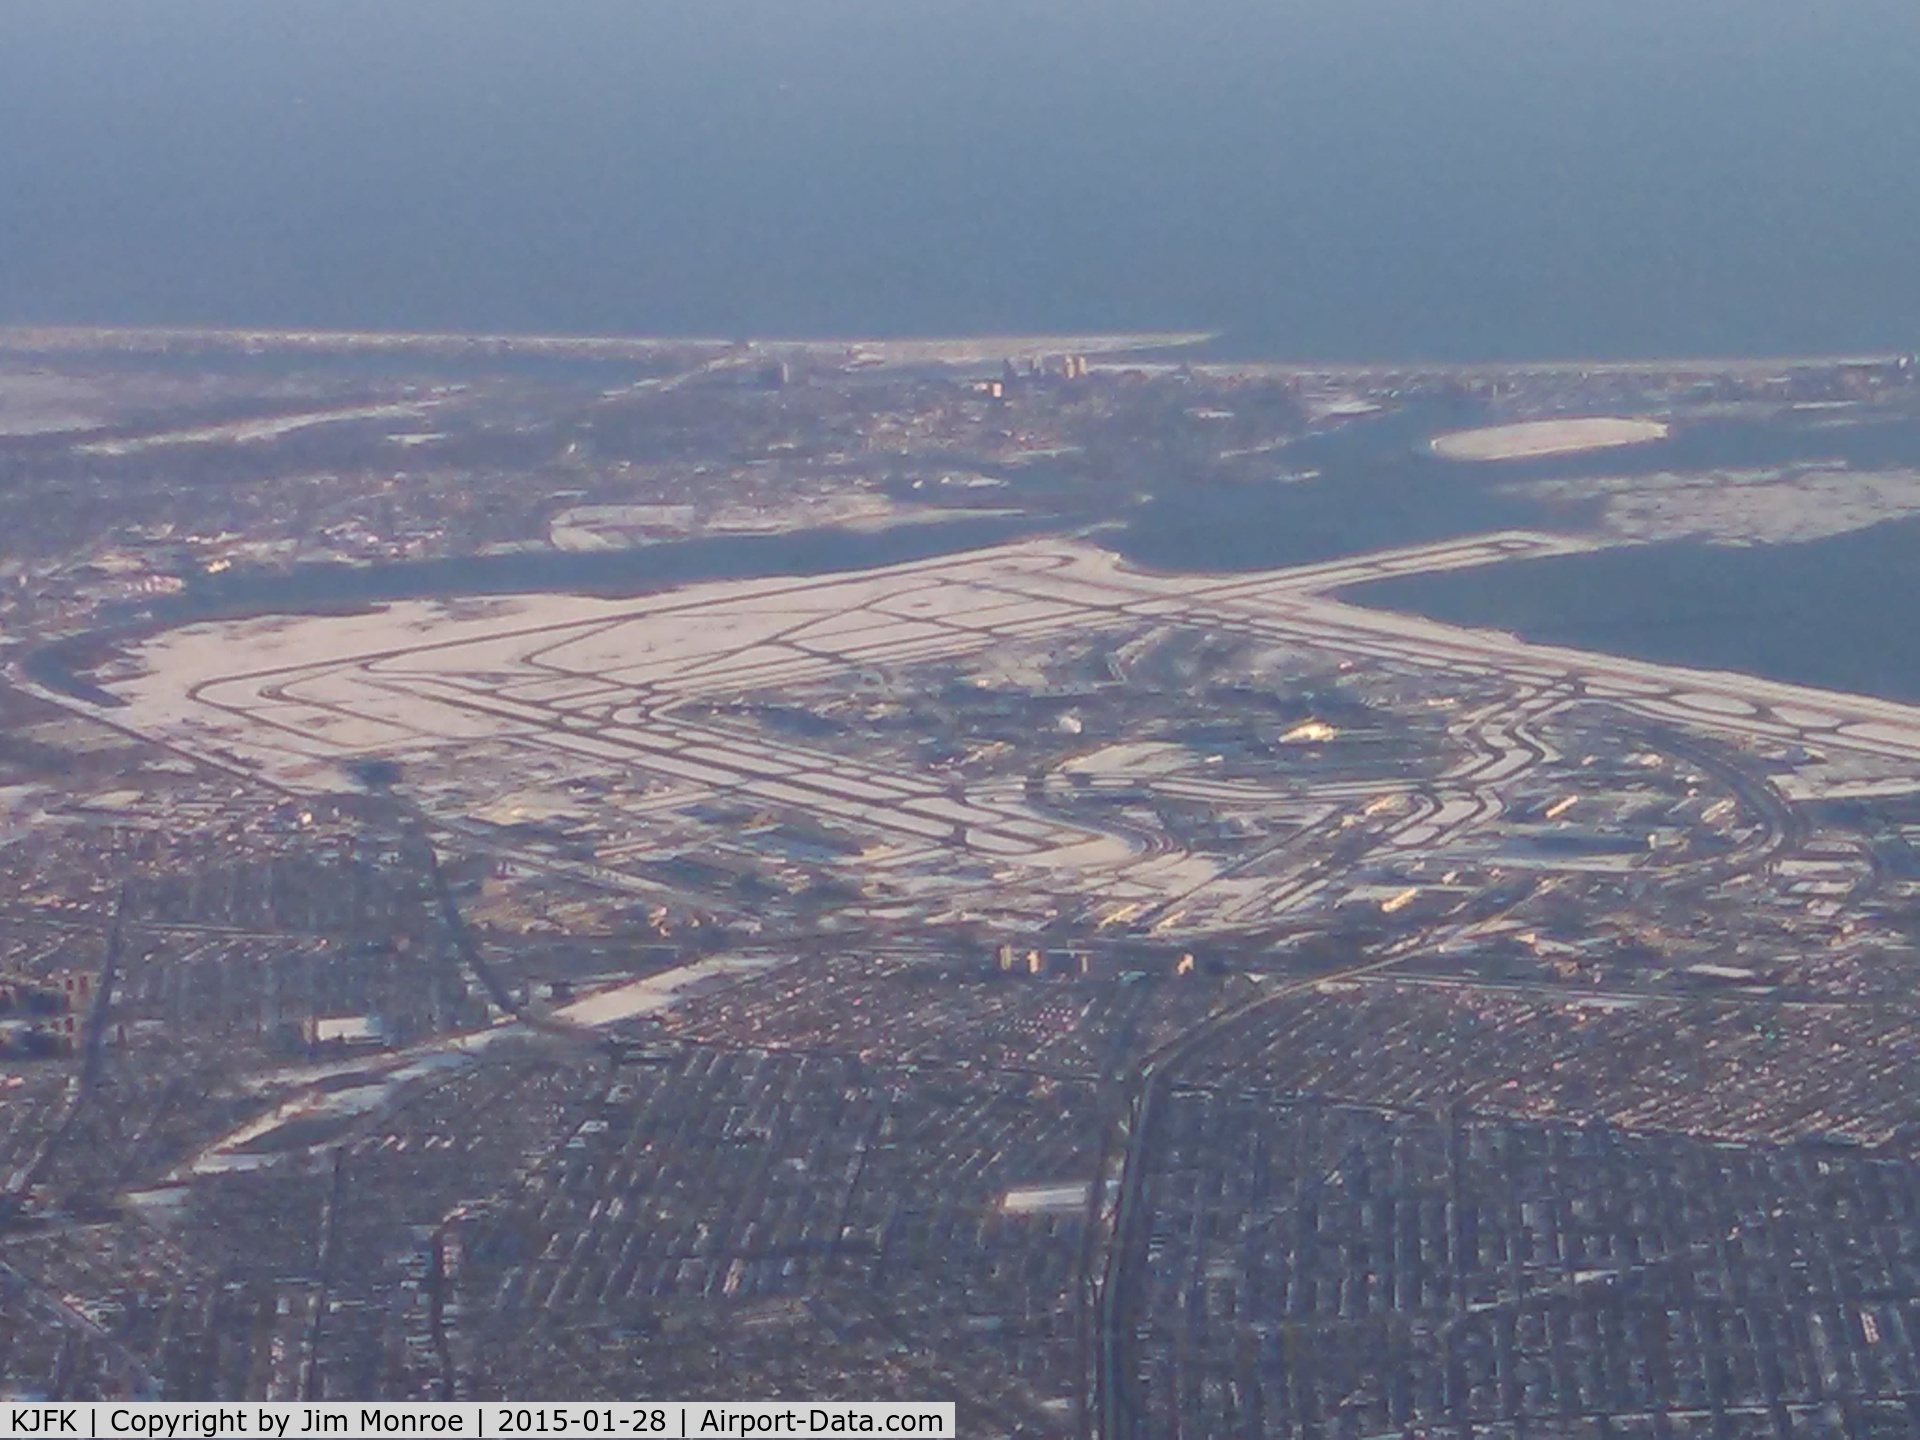 John F Kennedy International Airport (JFK) - From 8,500 feet over Long Island